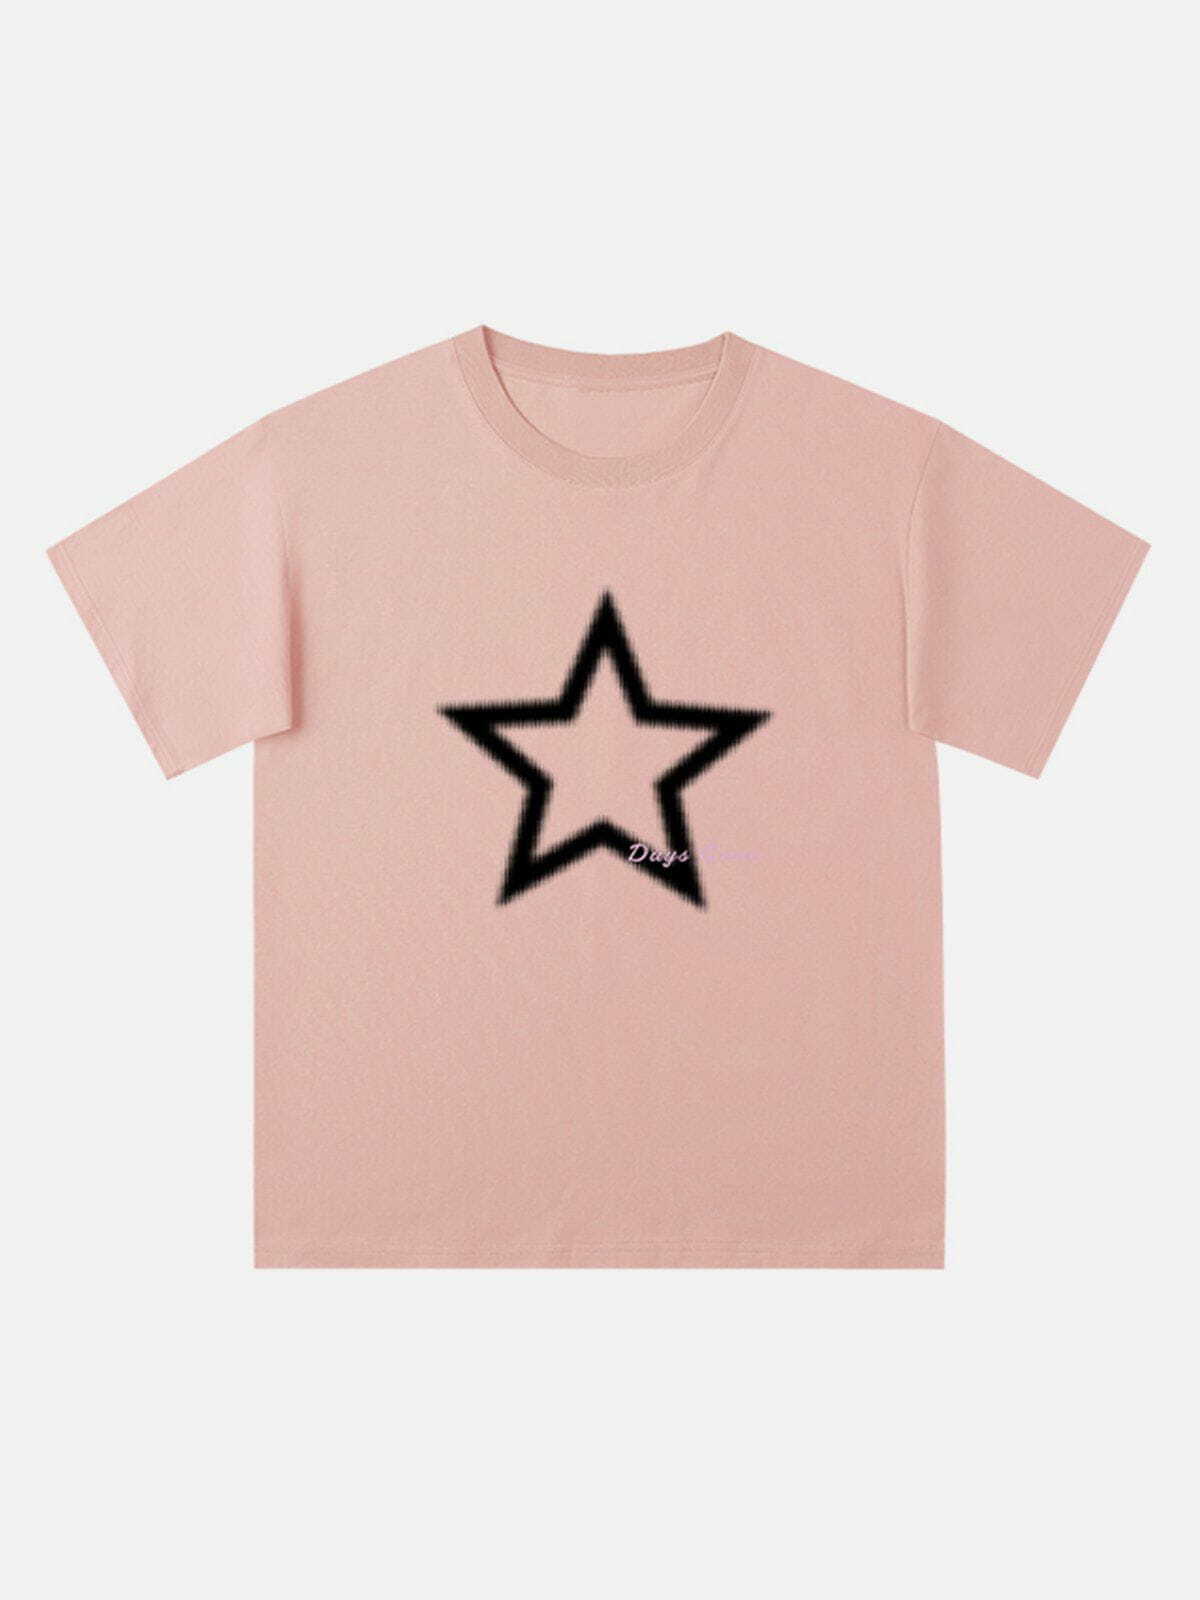 playful star print tee edgy  retro shirt for youthful streetwear 2261